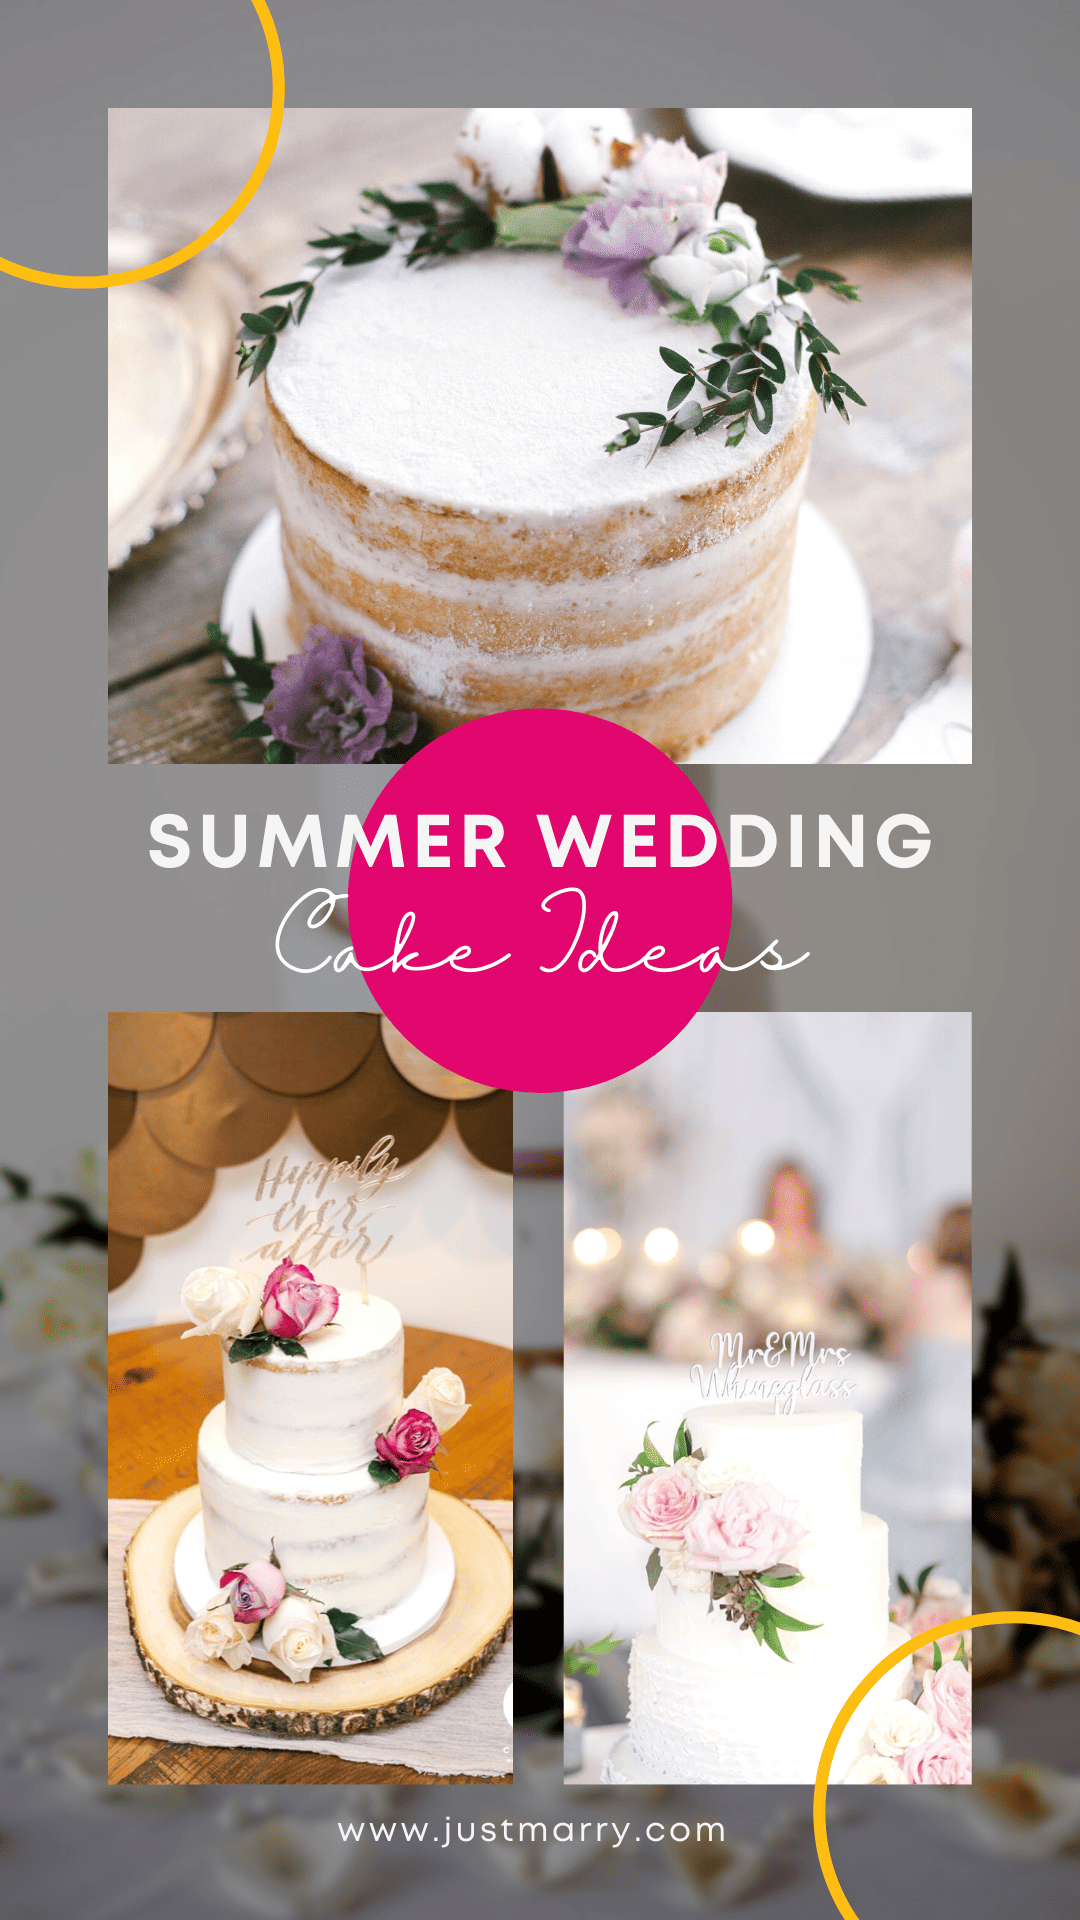 Summer Wedding Cake - Just Marry Weddings - Pinterest Graphic